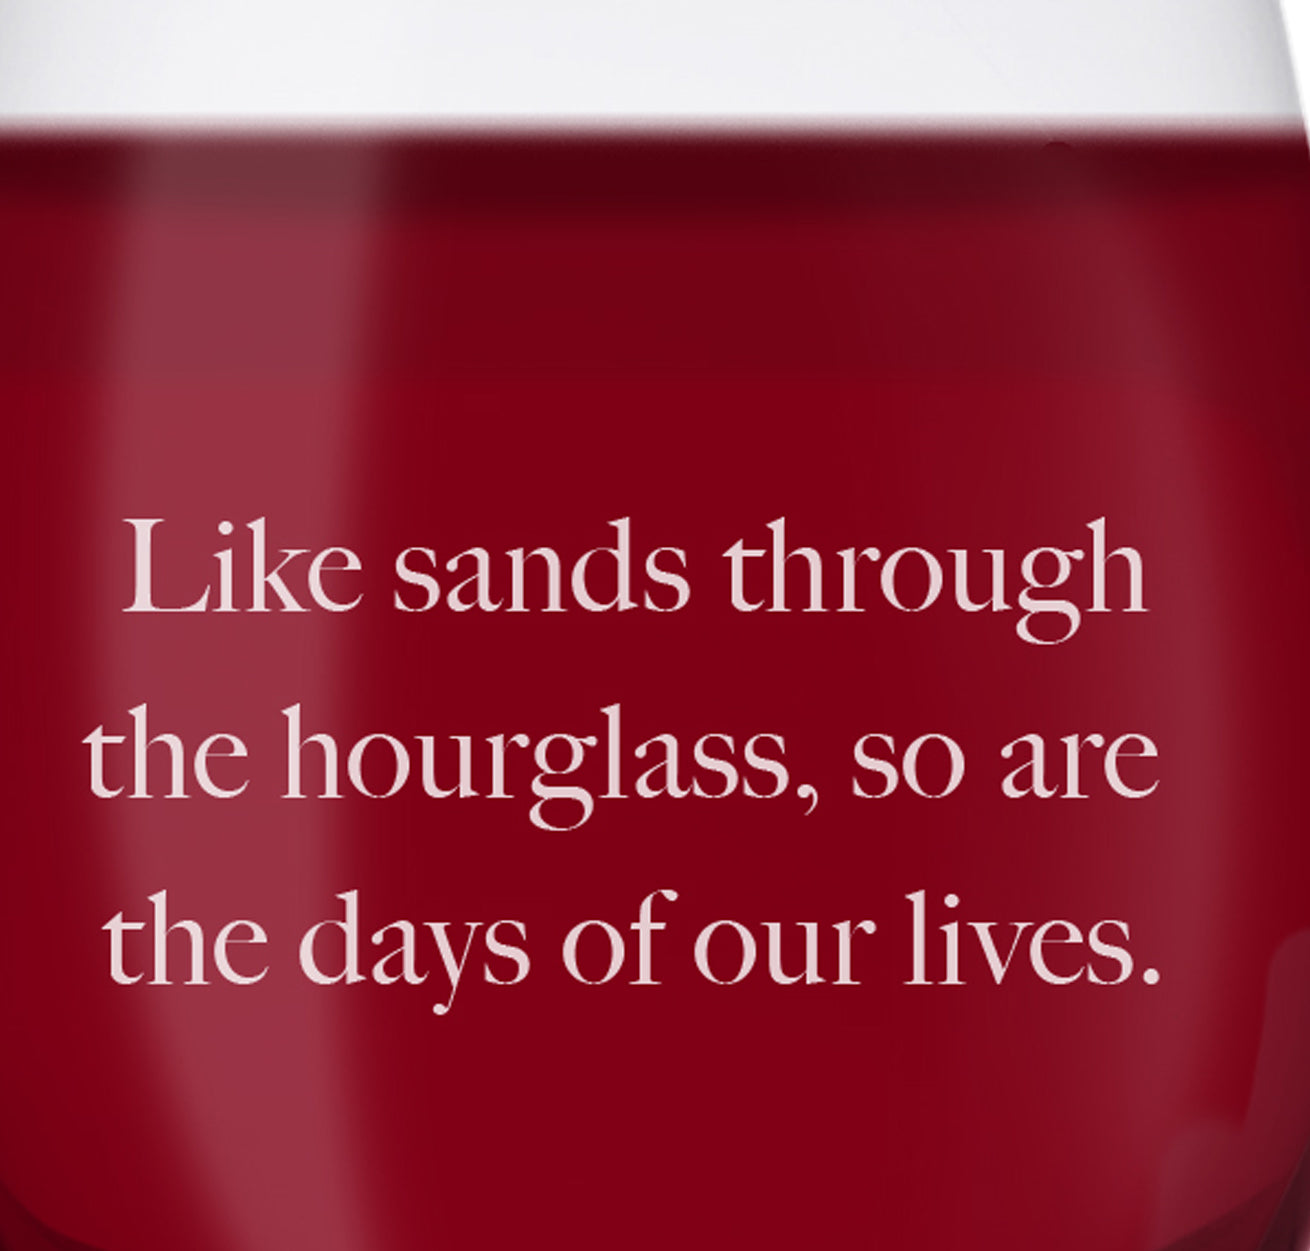 Size Matters - Stemless Wine Glass – Chris's Stuff, Inc